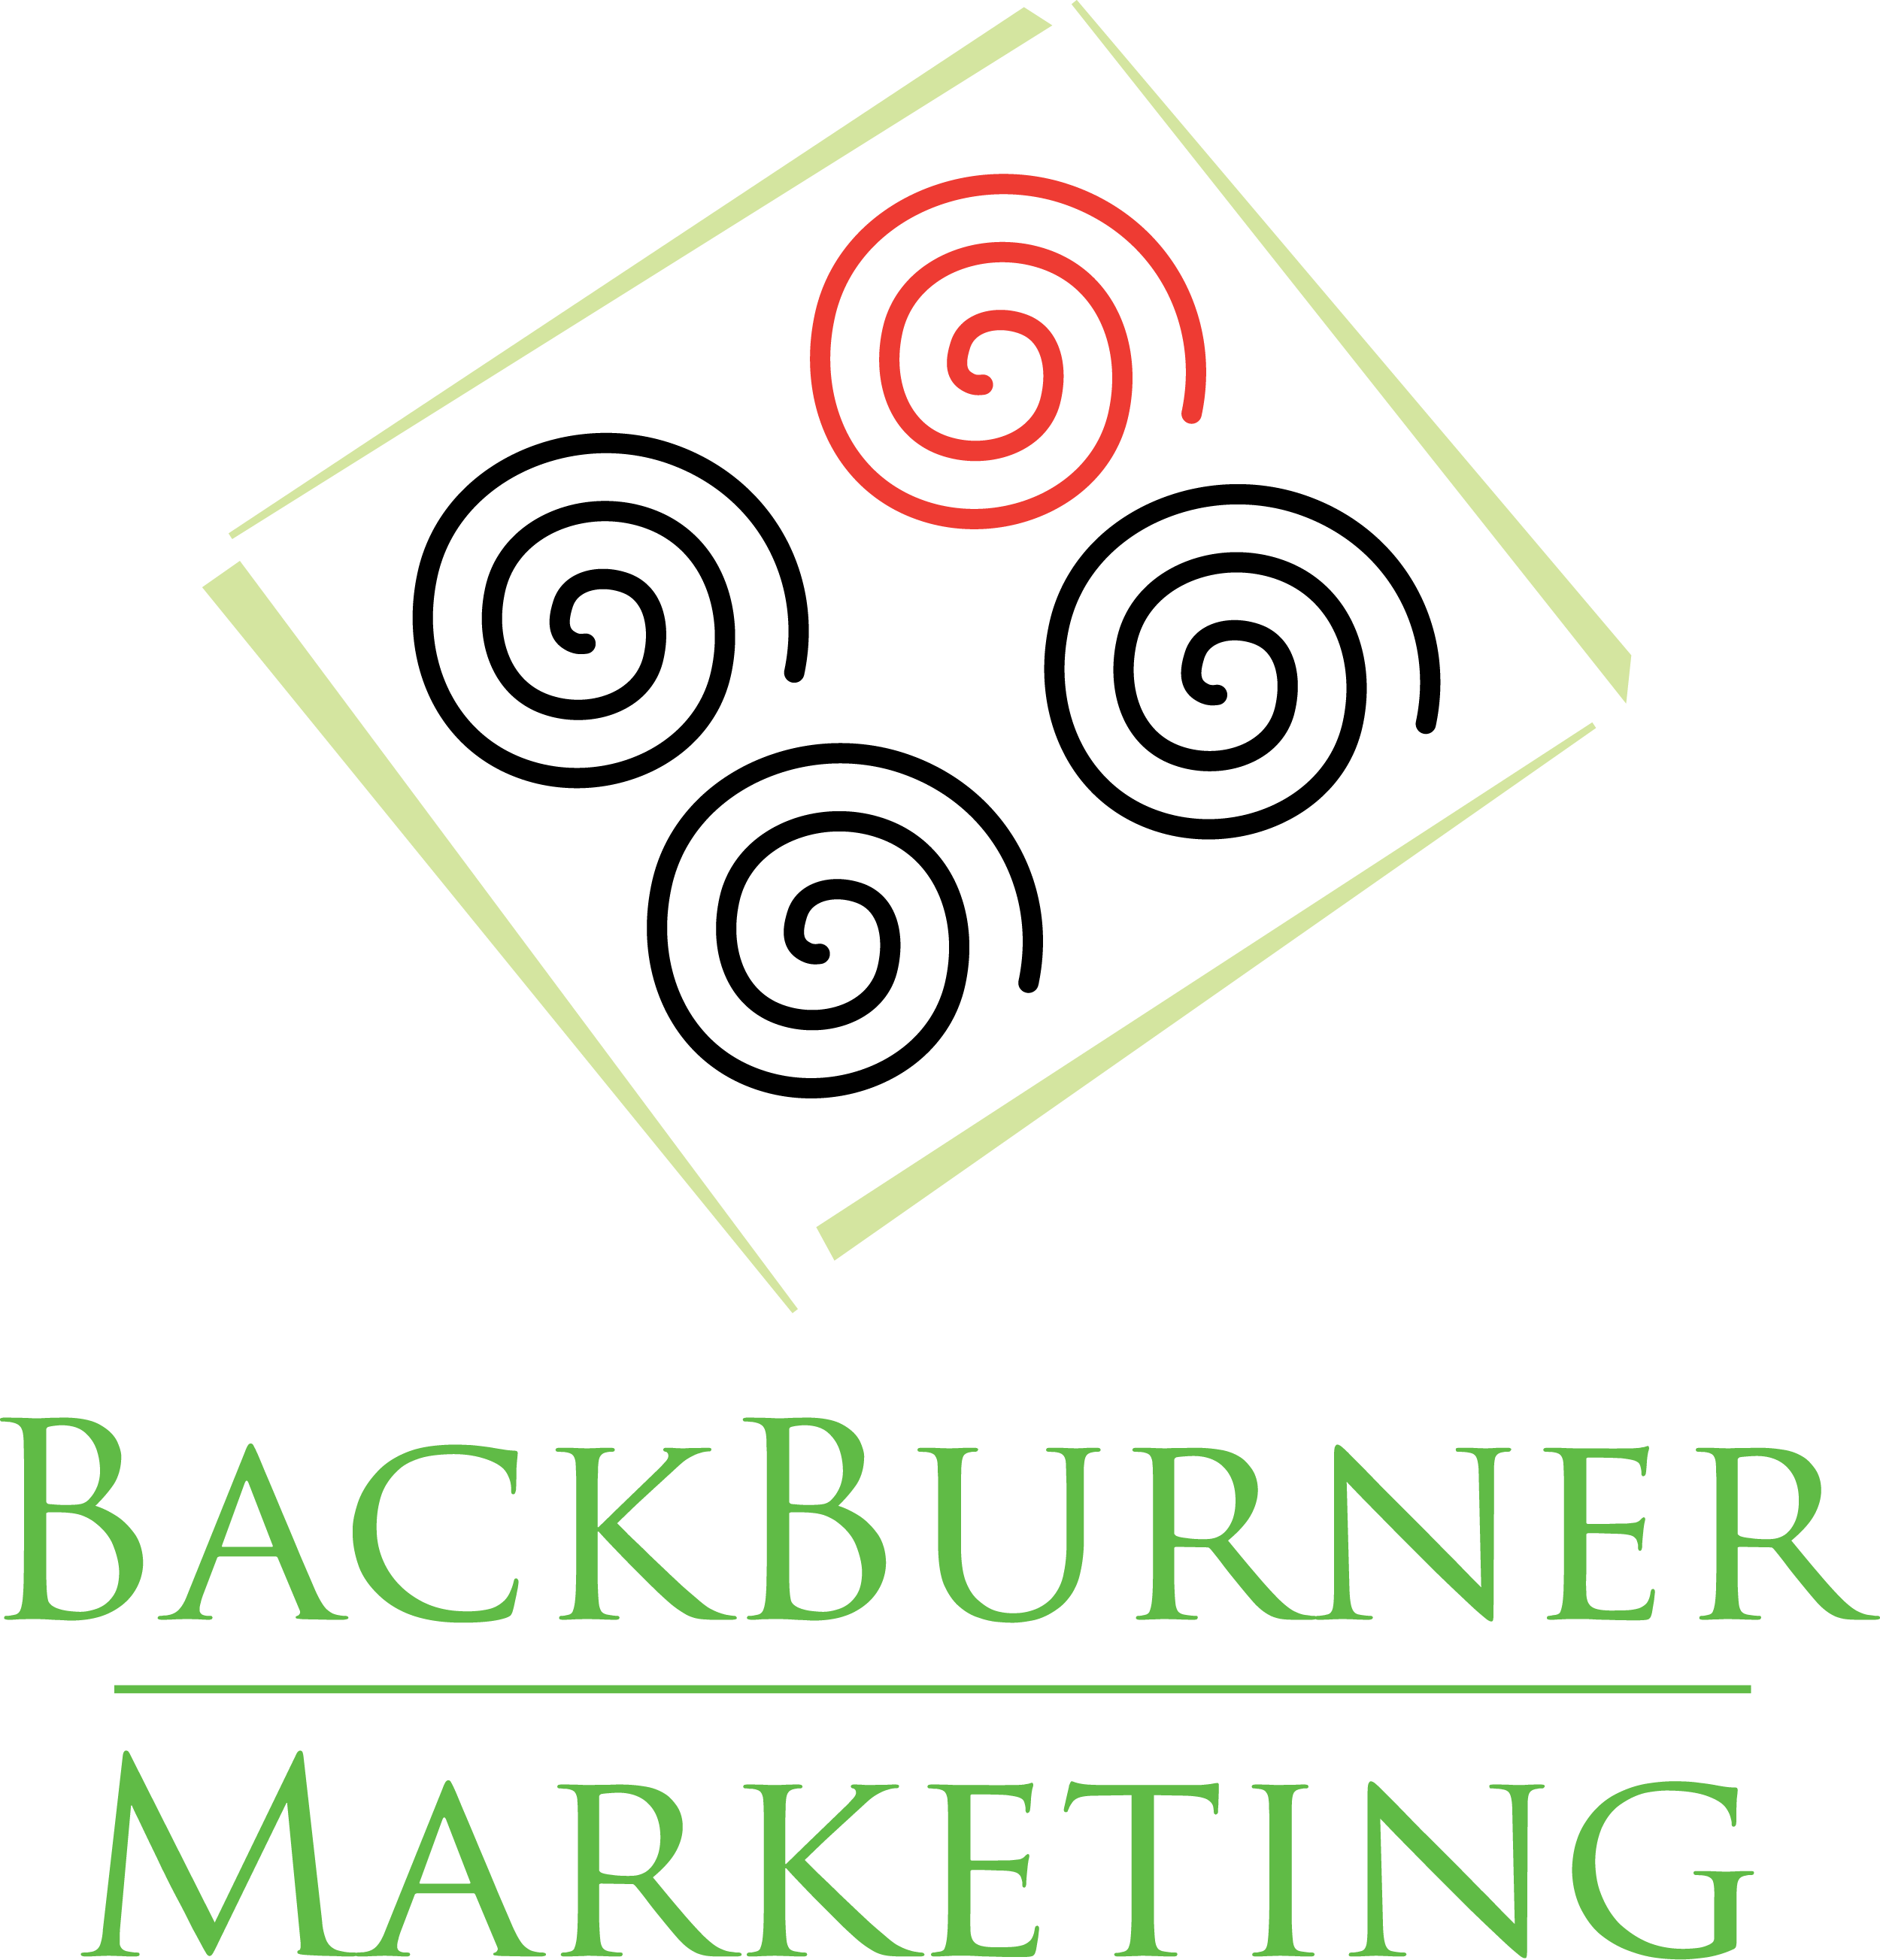 BackBurner Marketing